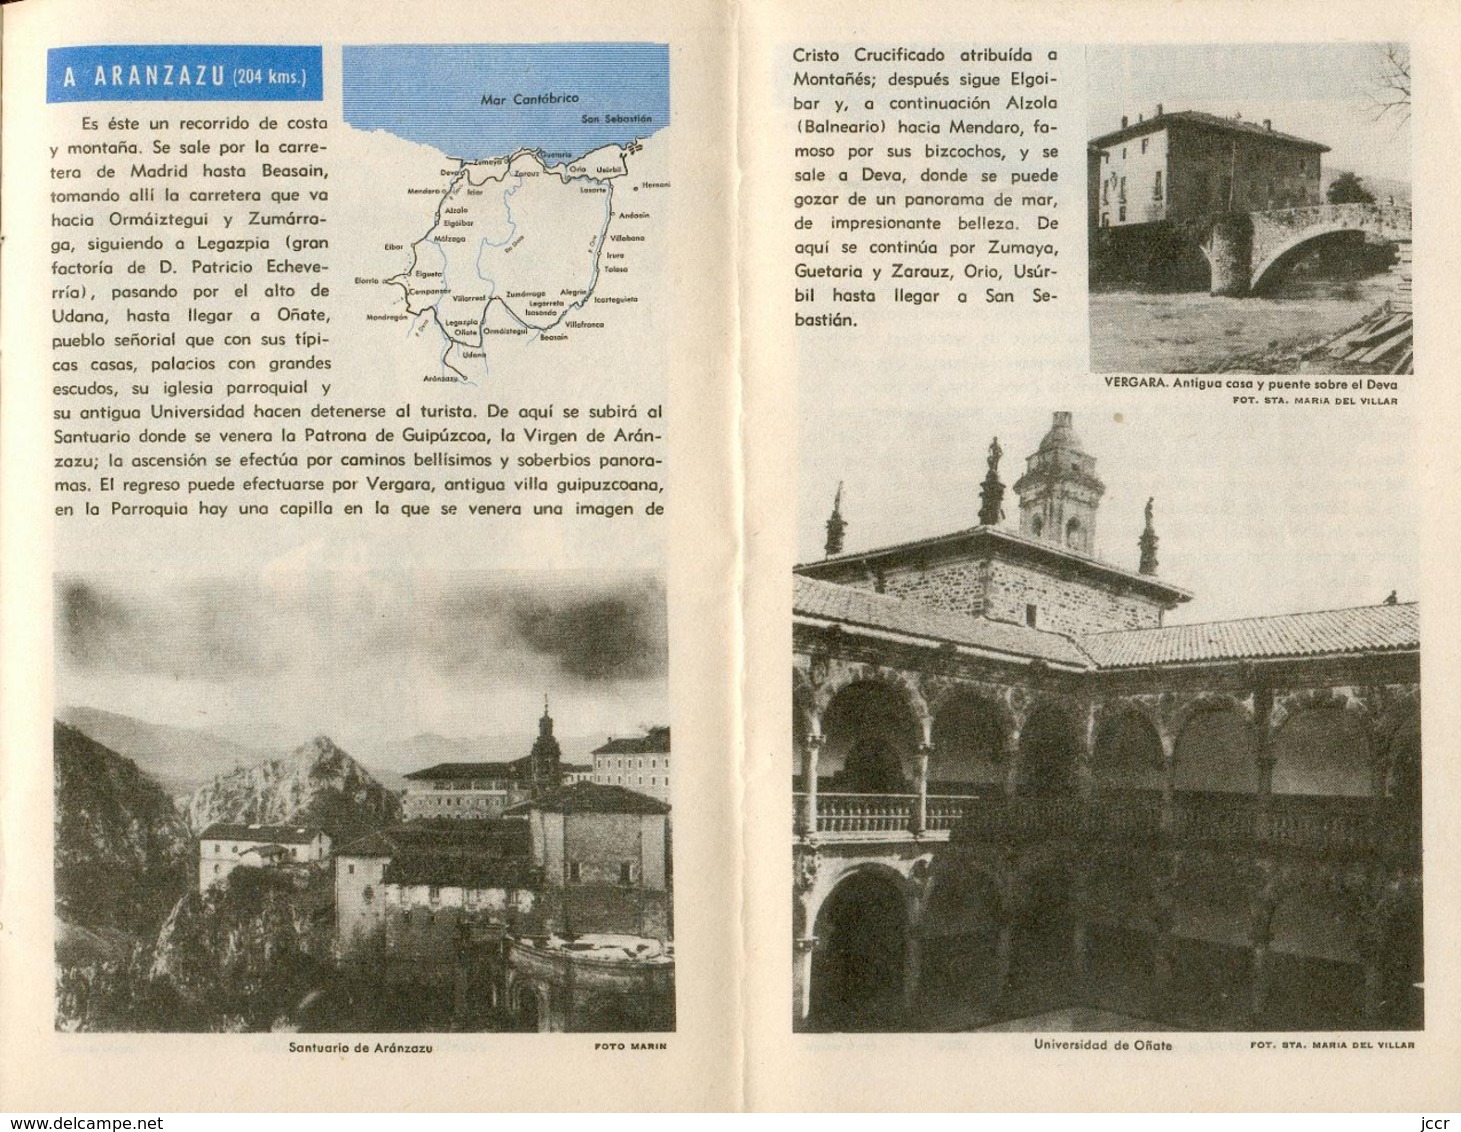 San Sebastian - Guide illustré ancien en espagnol